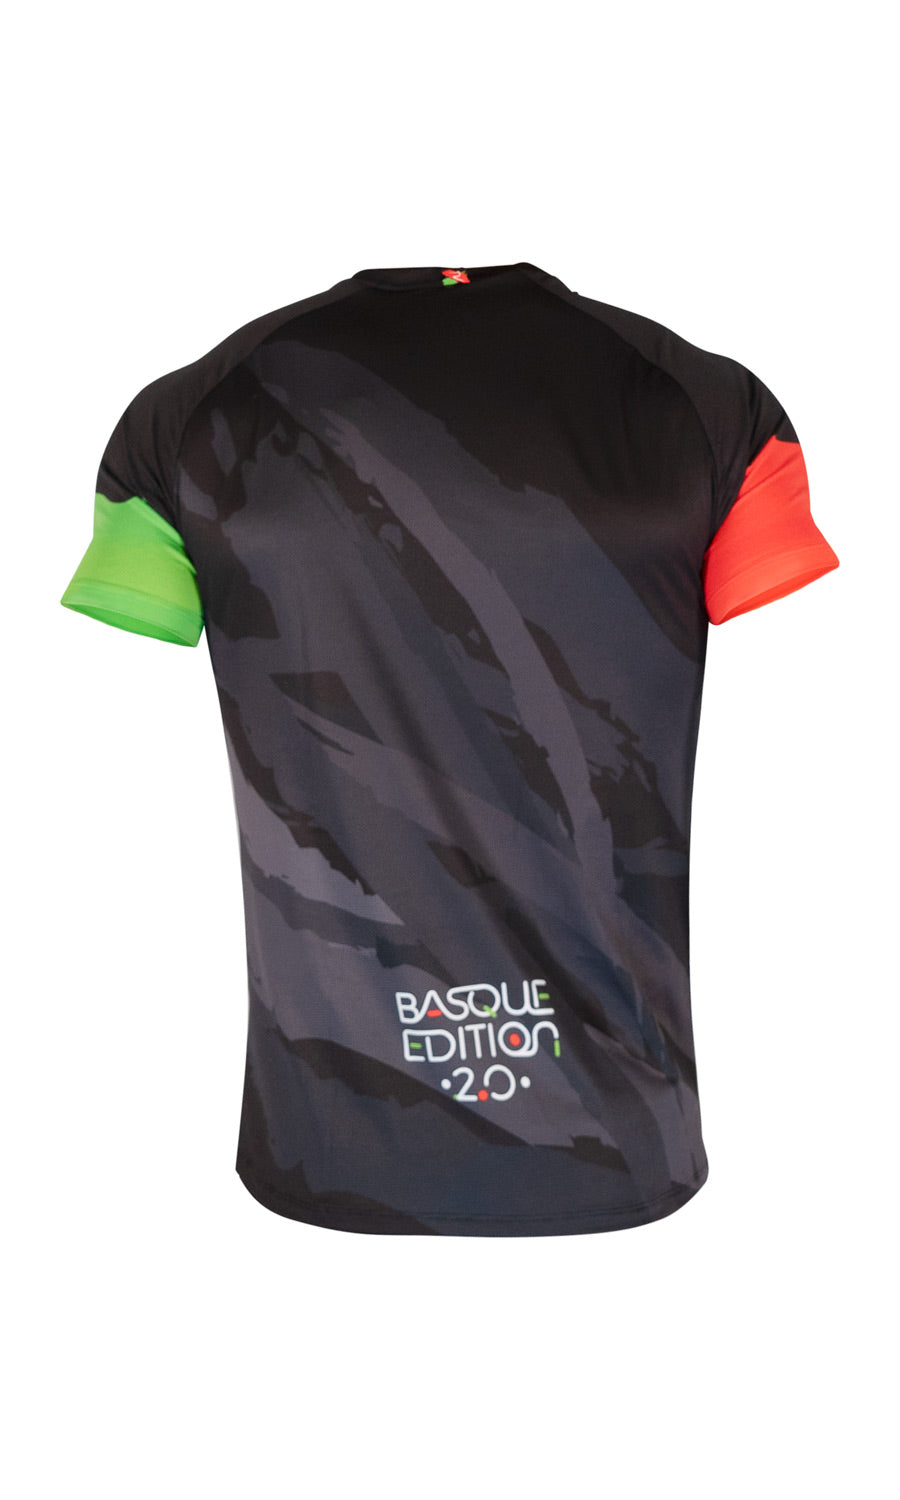 T-shirt de course EUSKADI — 2.0